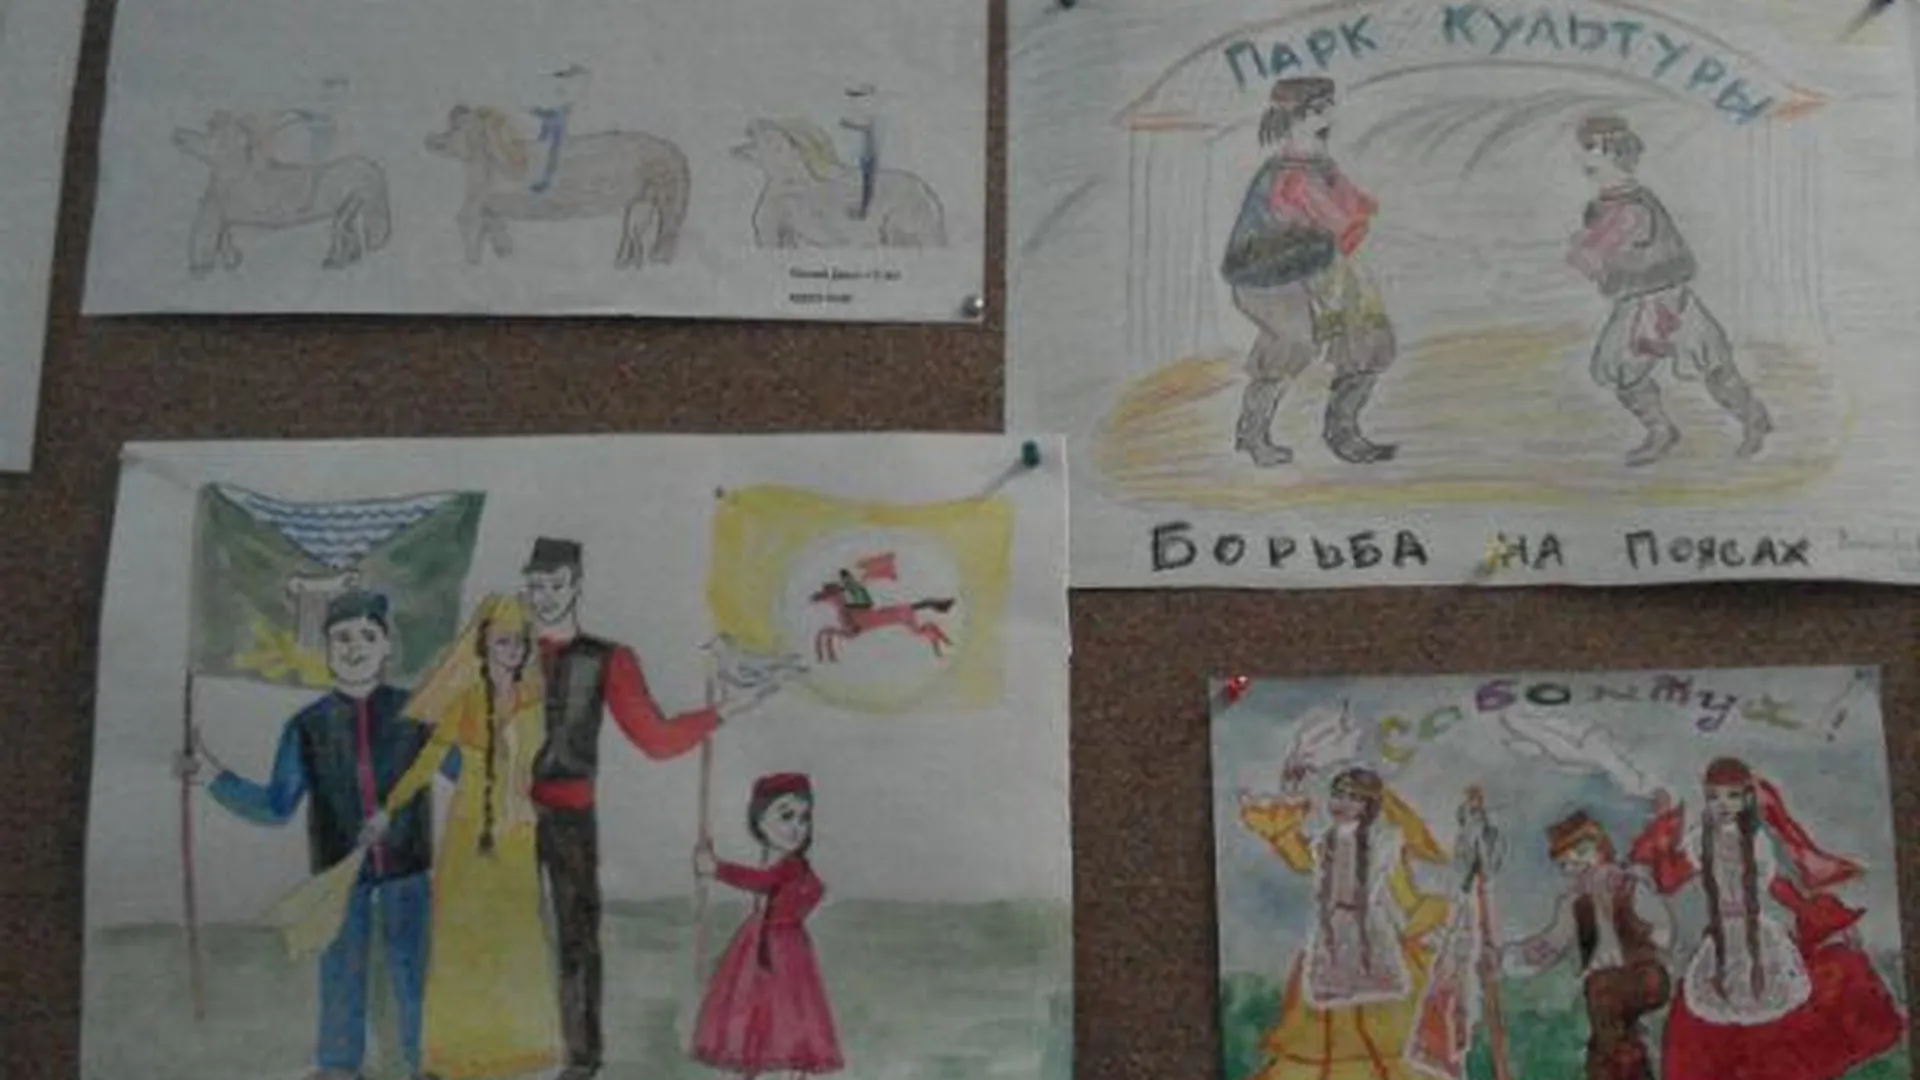 Детские рисунки на тему сабантуя представили в Люберецком районе